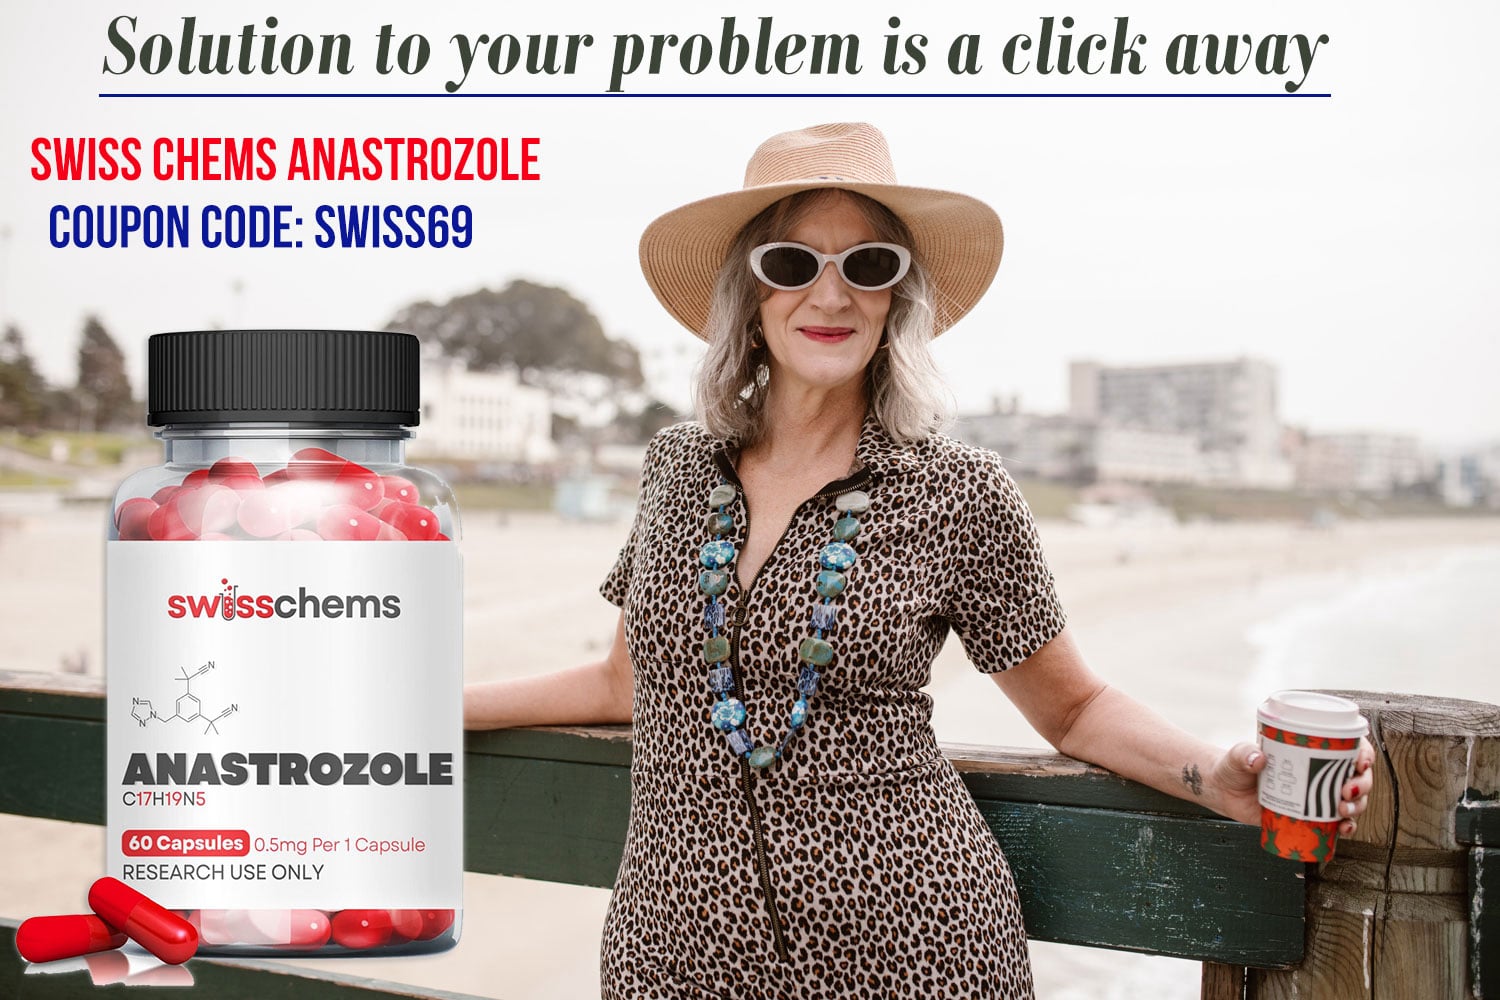 swiss chems anastrozole product